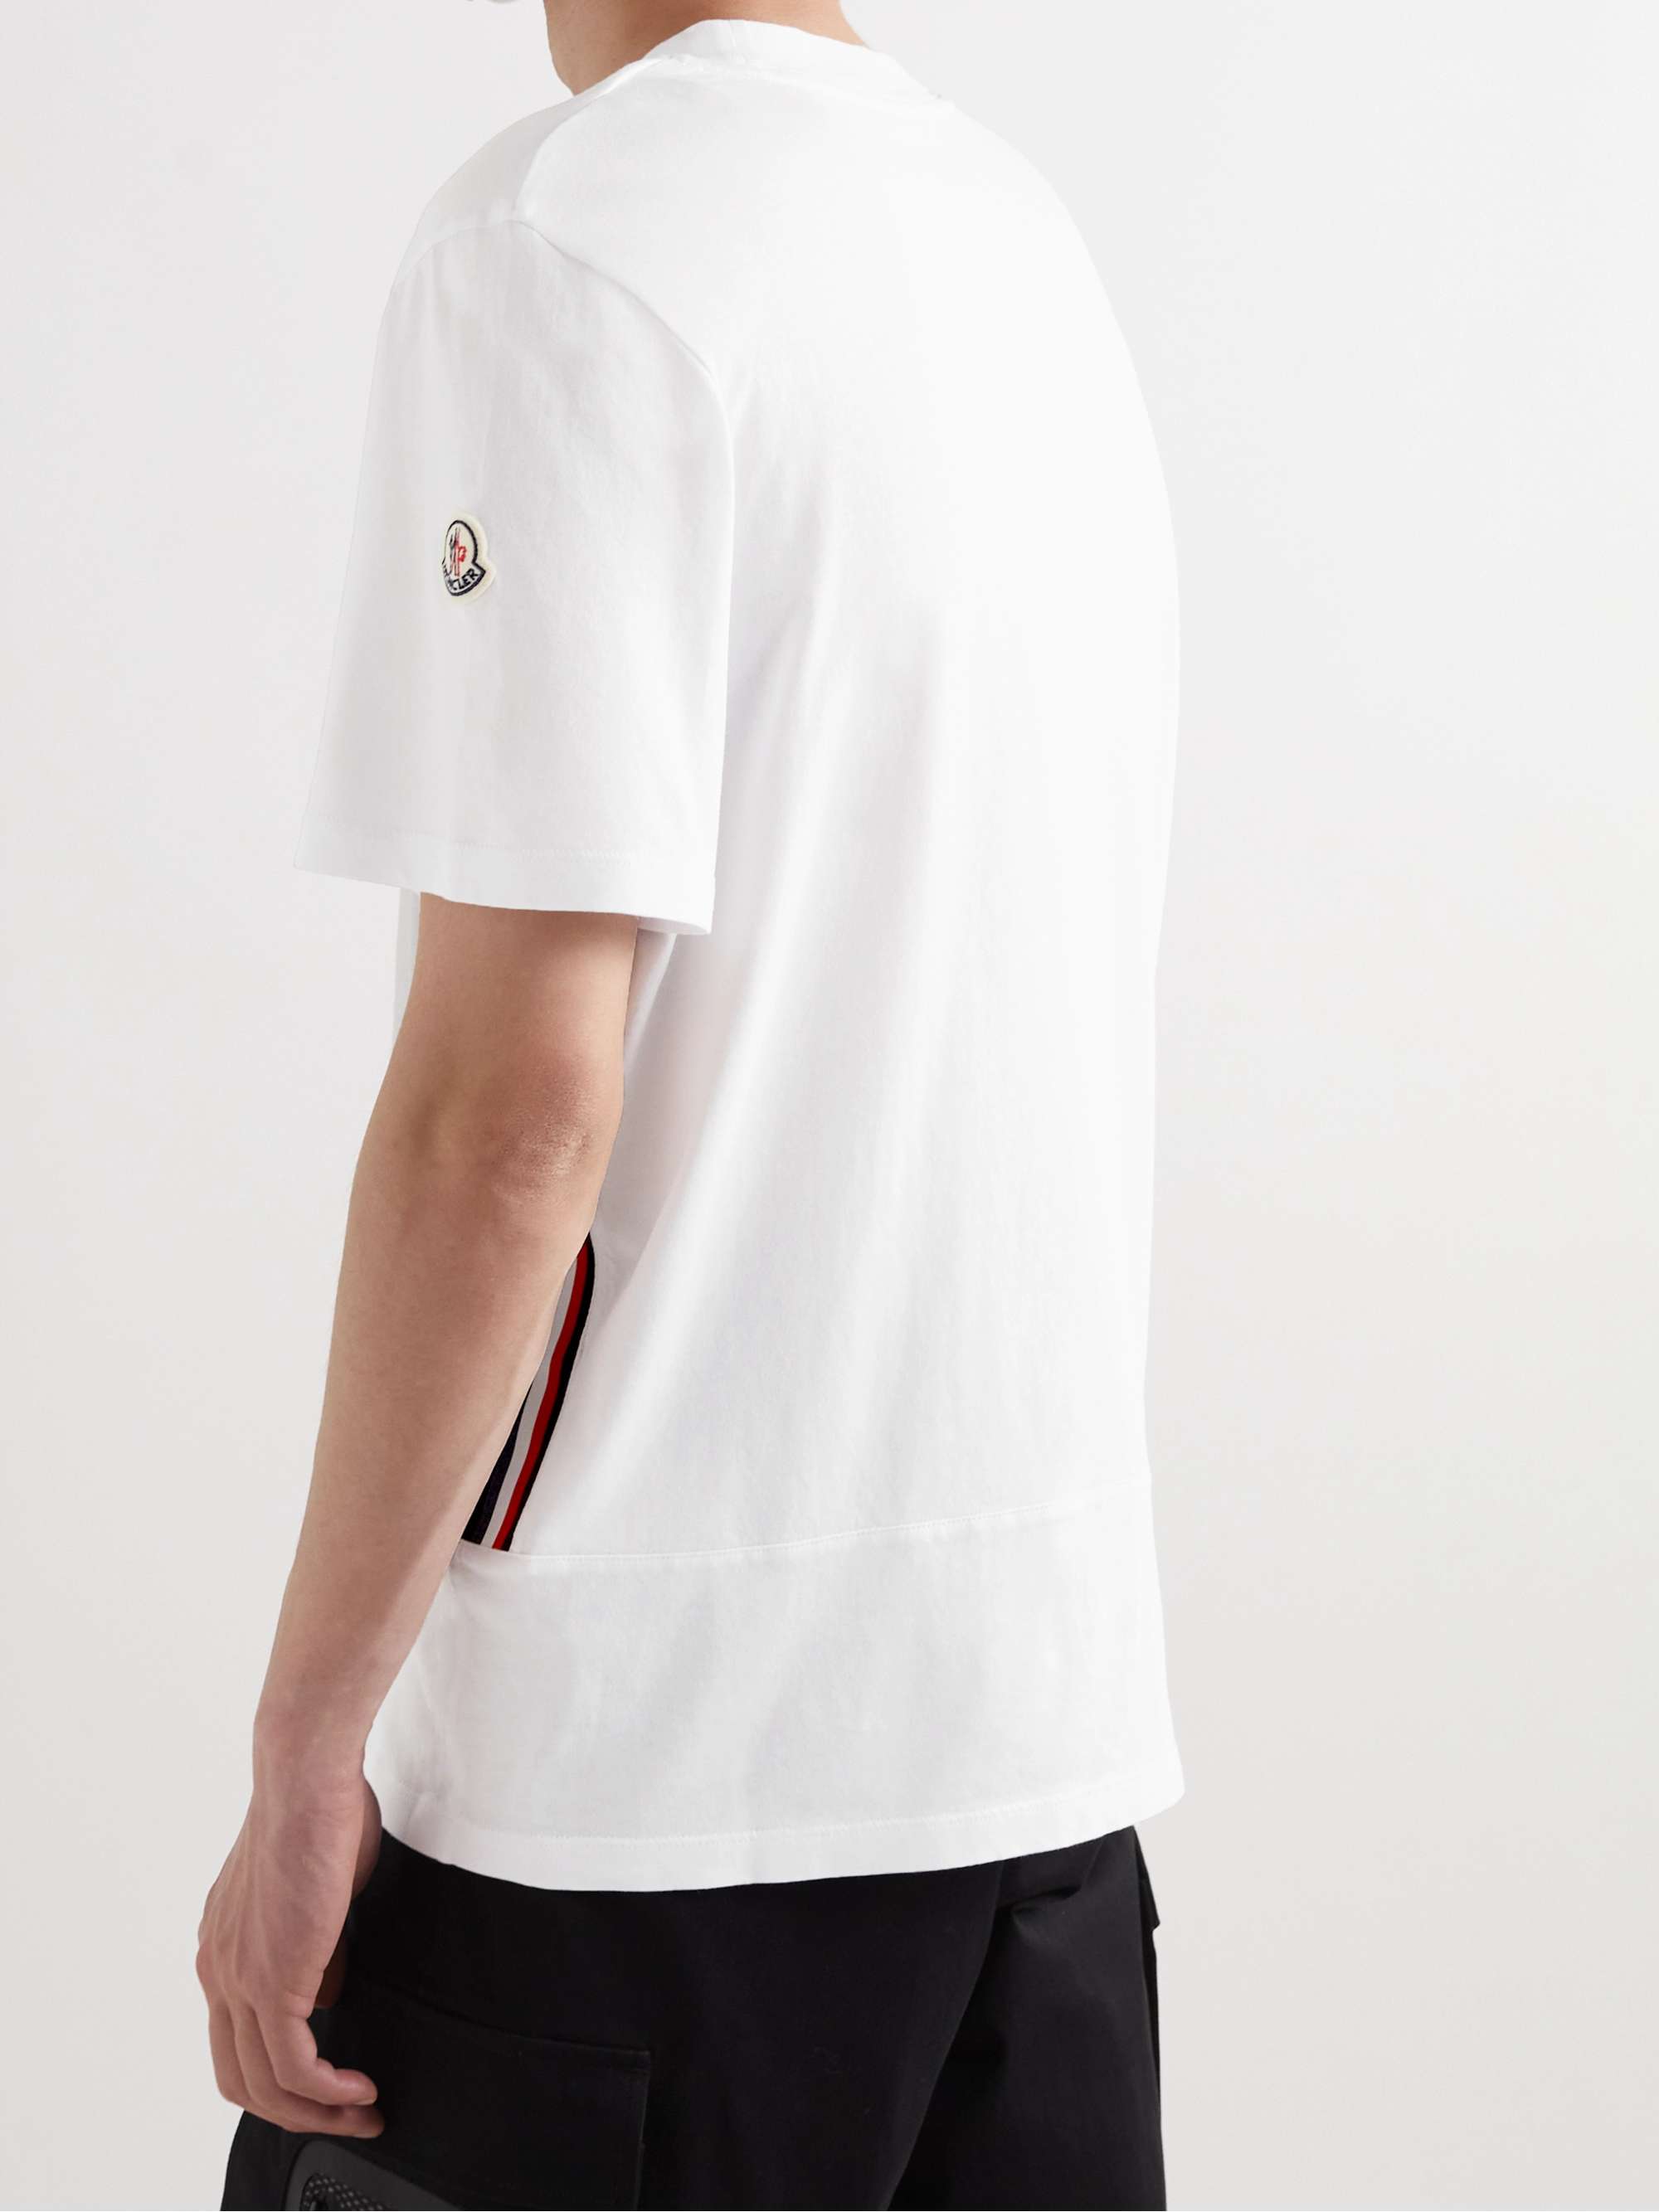 MONCLER Logo-Print Cotton-Jersey T-Shirt for Men | MR PORTER